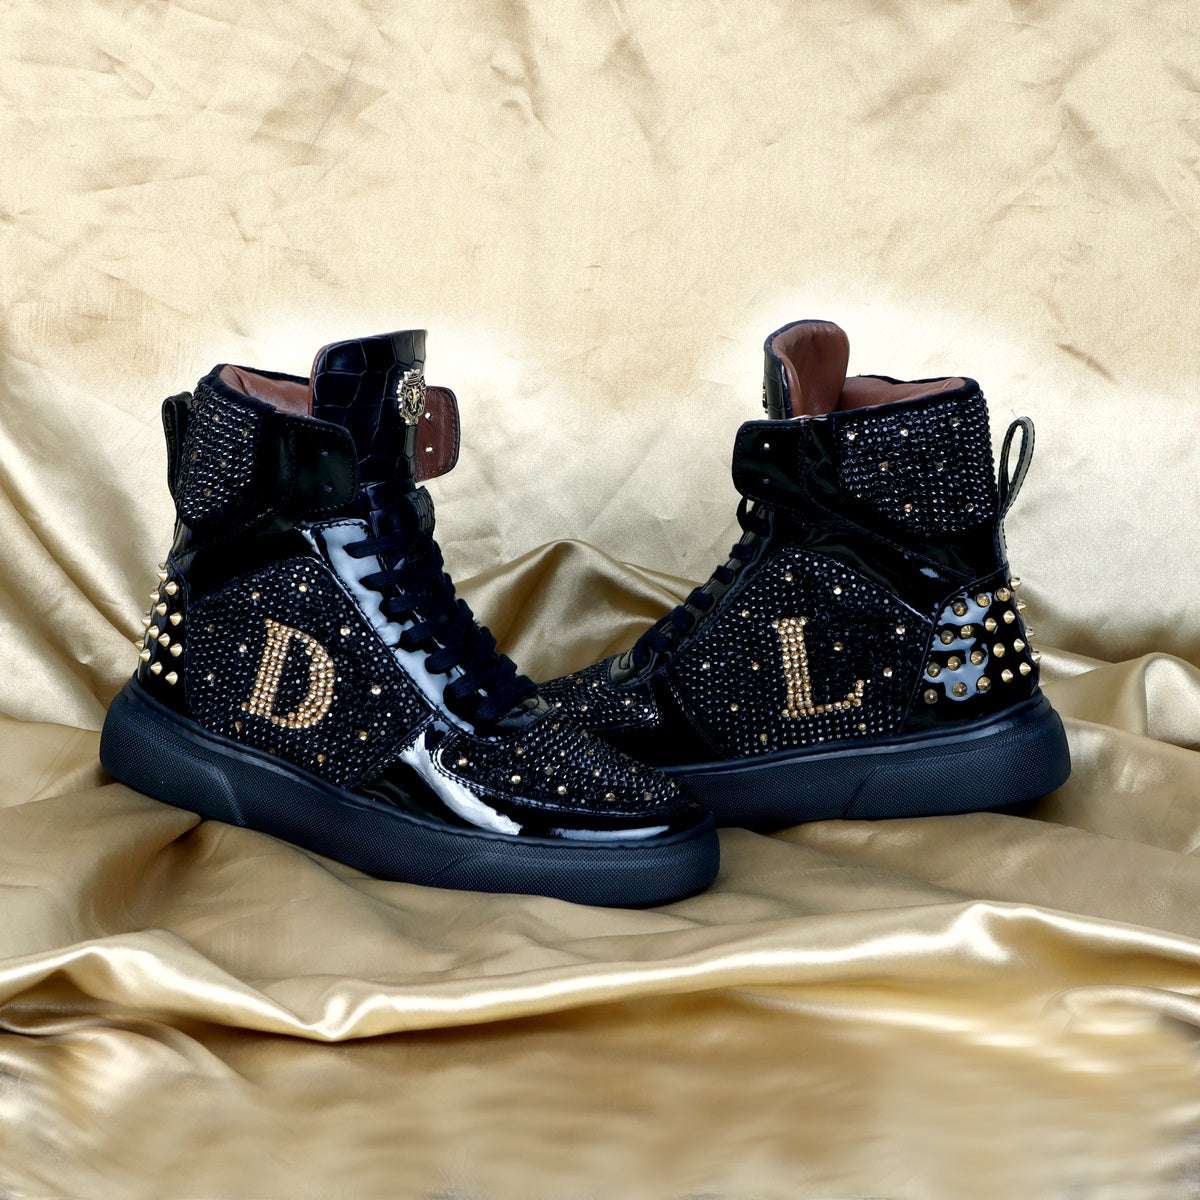 Bespoke "DL" Initial Black and Golden Swarovski Crystal Zardosi Patent Leather Sneakers with Golden Stud by Brune & Bareskin